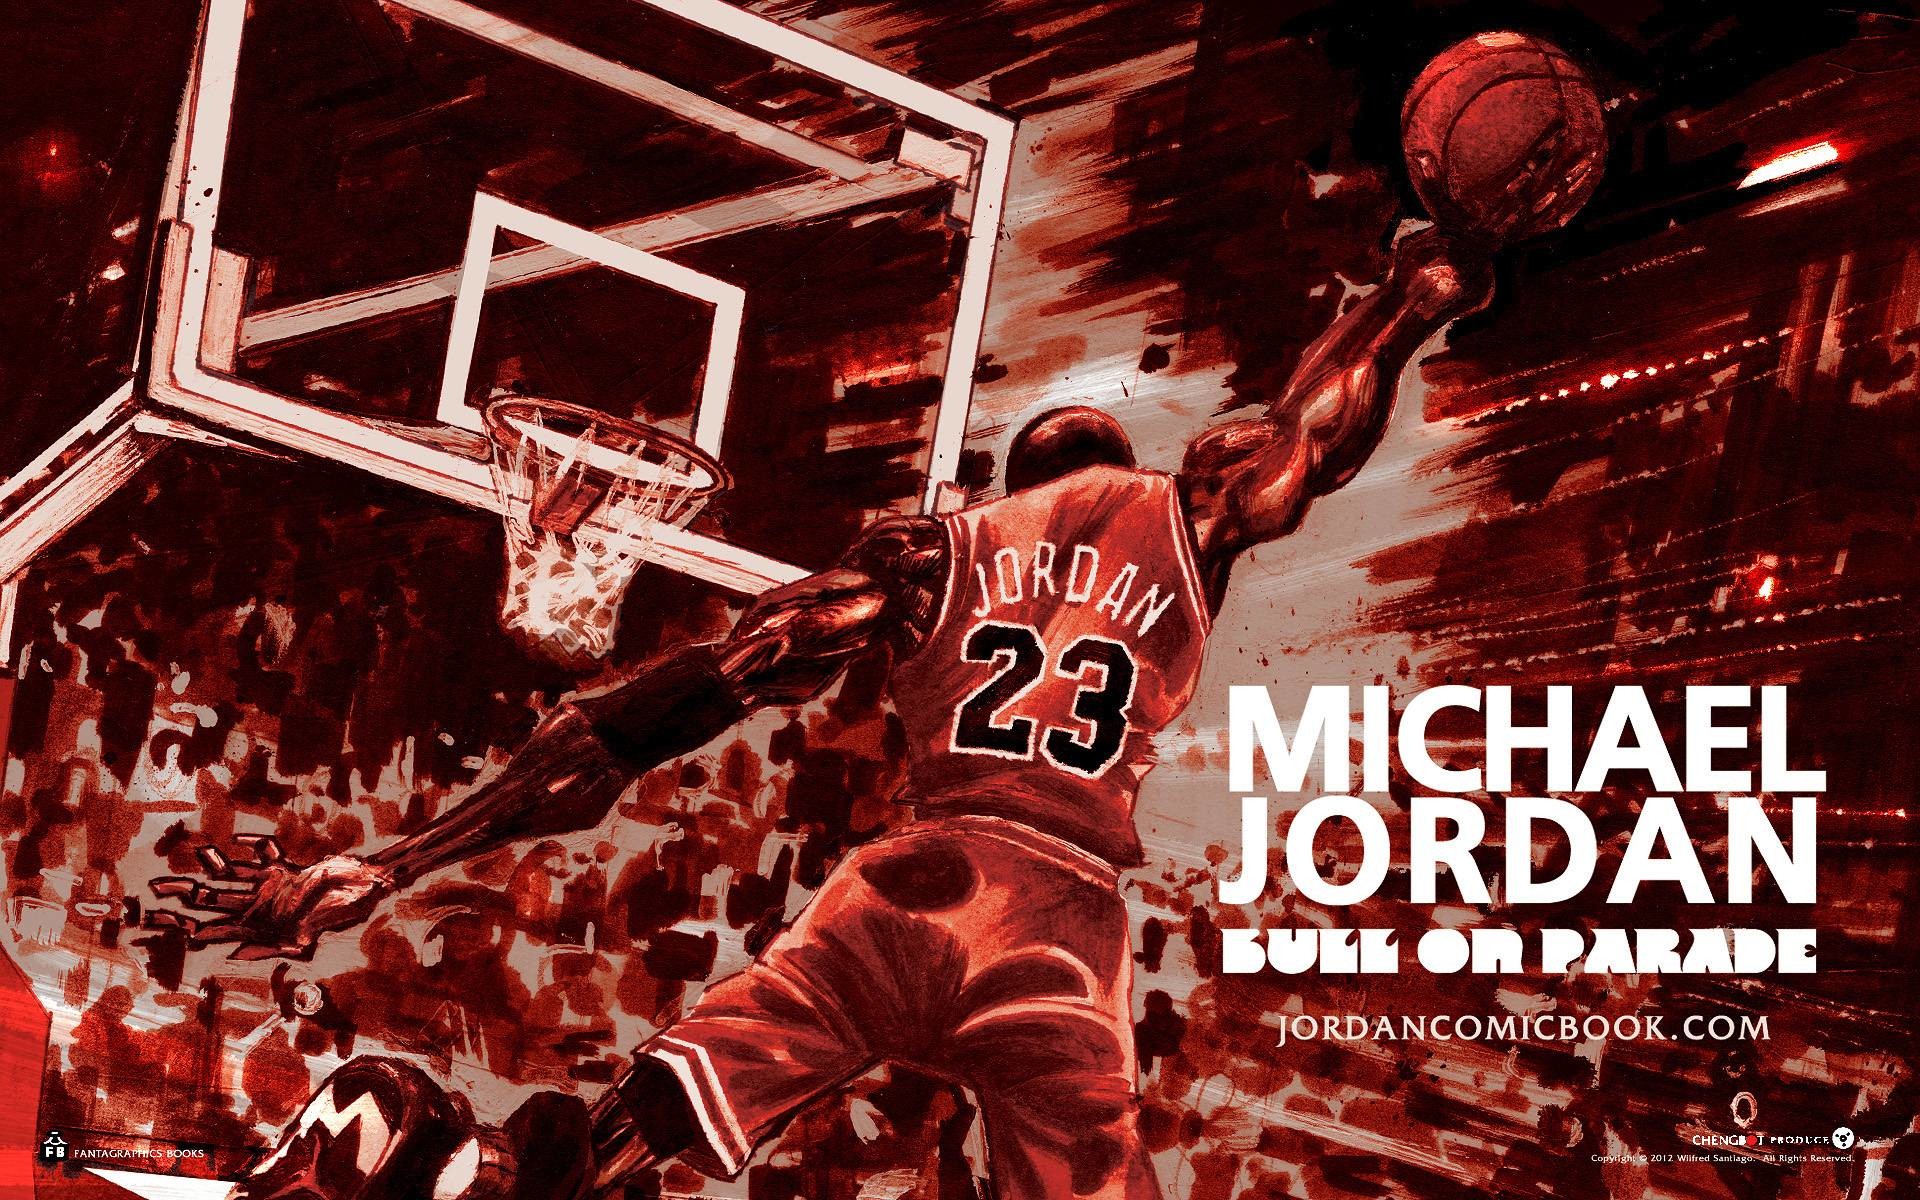 1920x1200 Michael Jordan Wallpapers - Full HD wallpaper search - page 4